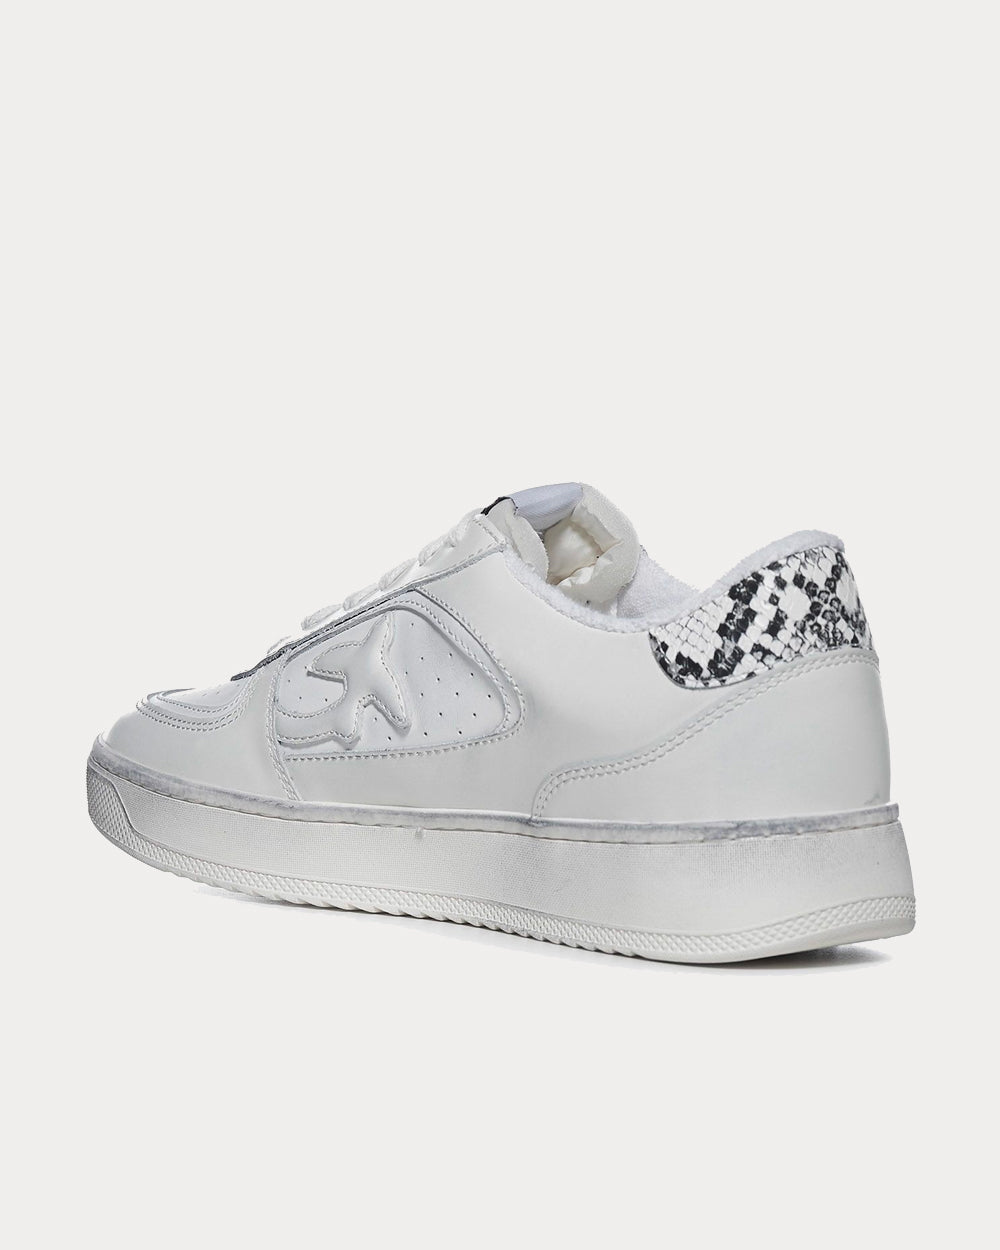 Pinko - Liquirizia Distressed White Low Top Sneakers